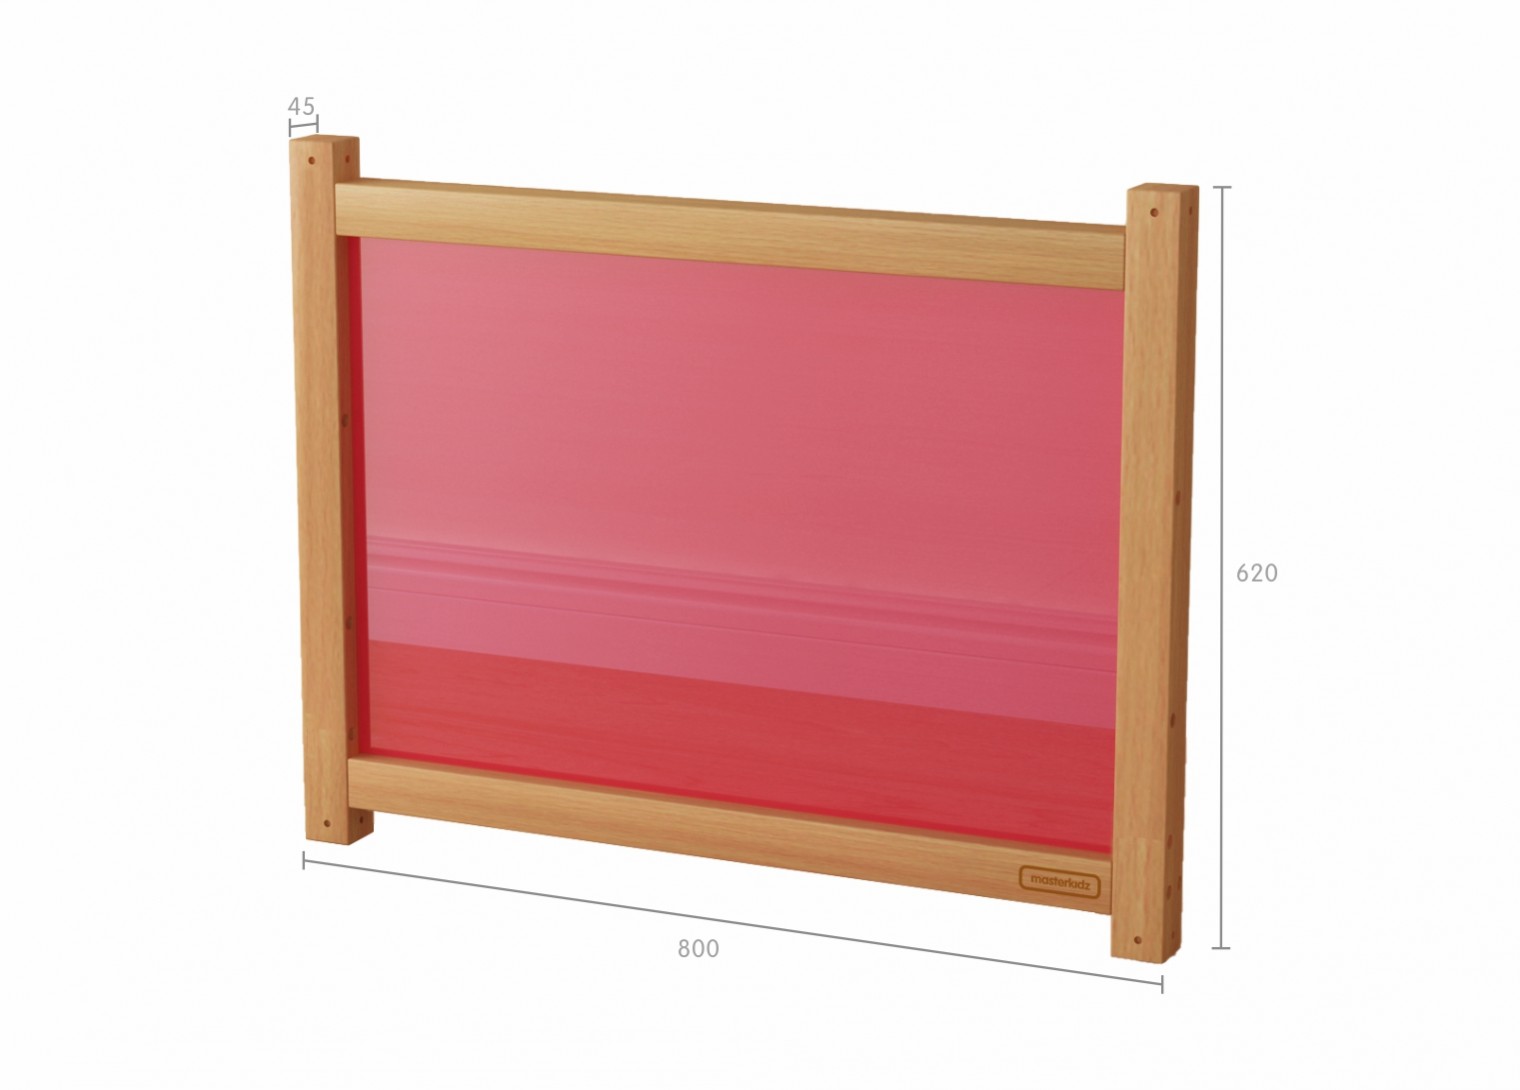 620H x 800L Divider Panel - Translucent Red